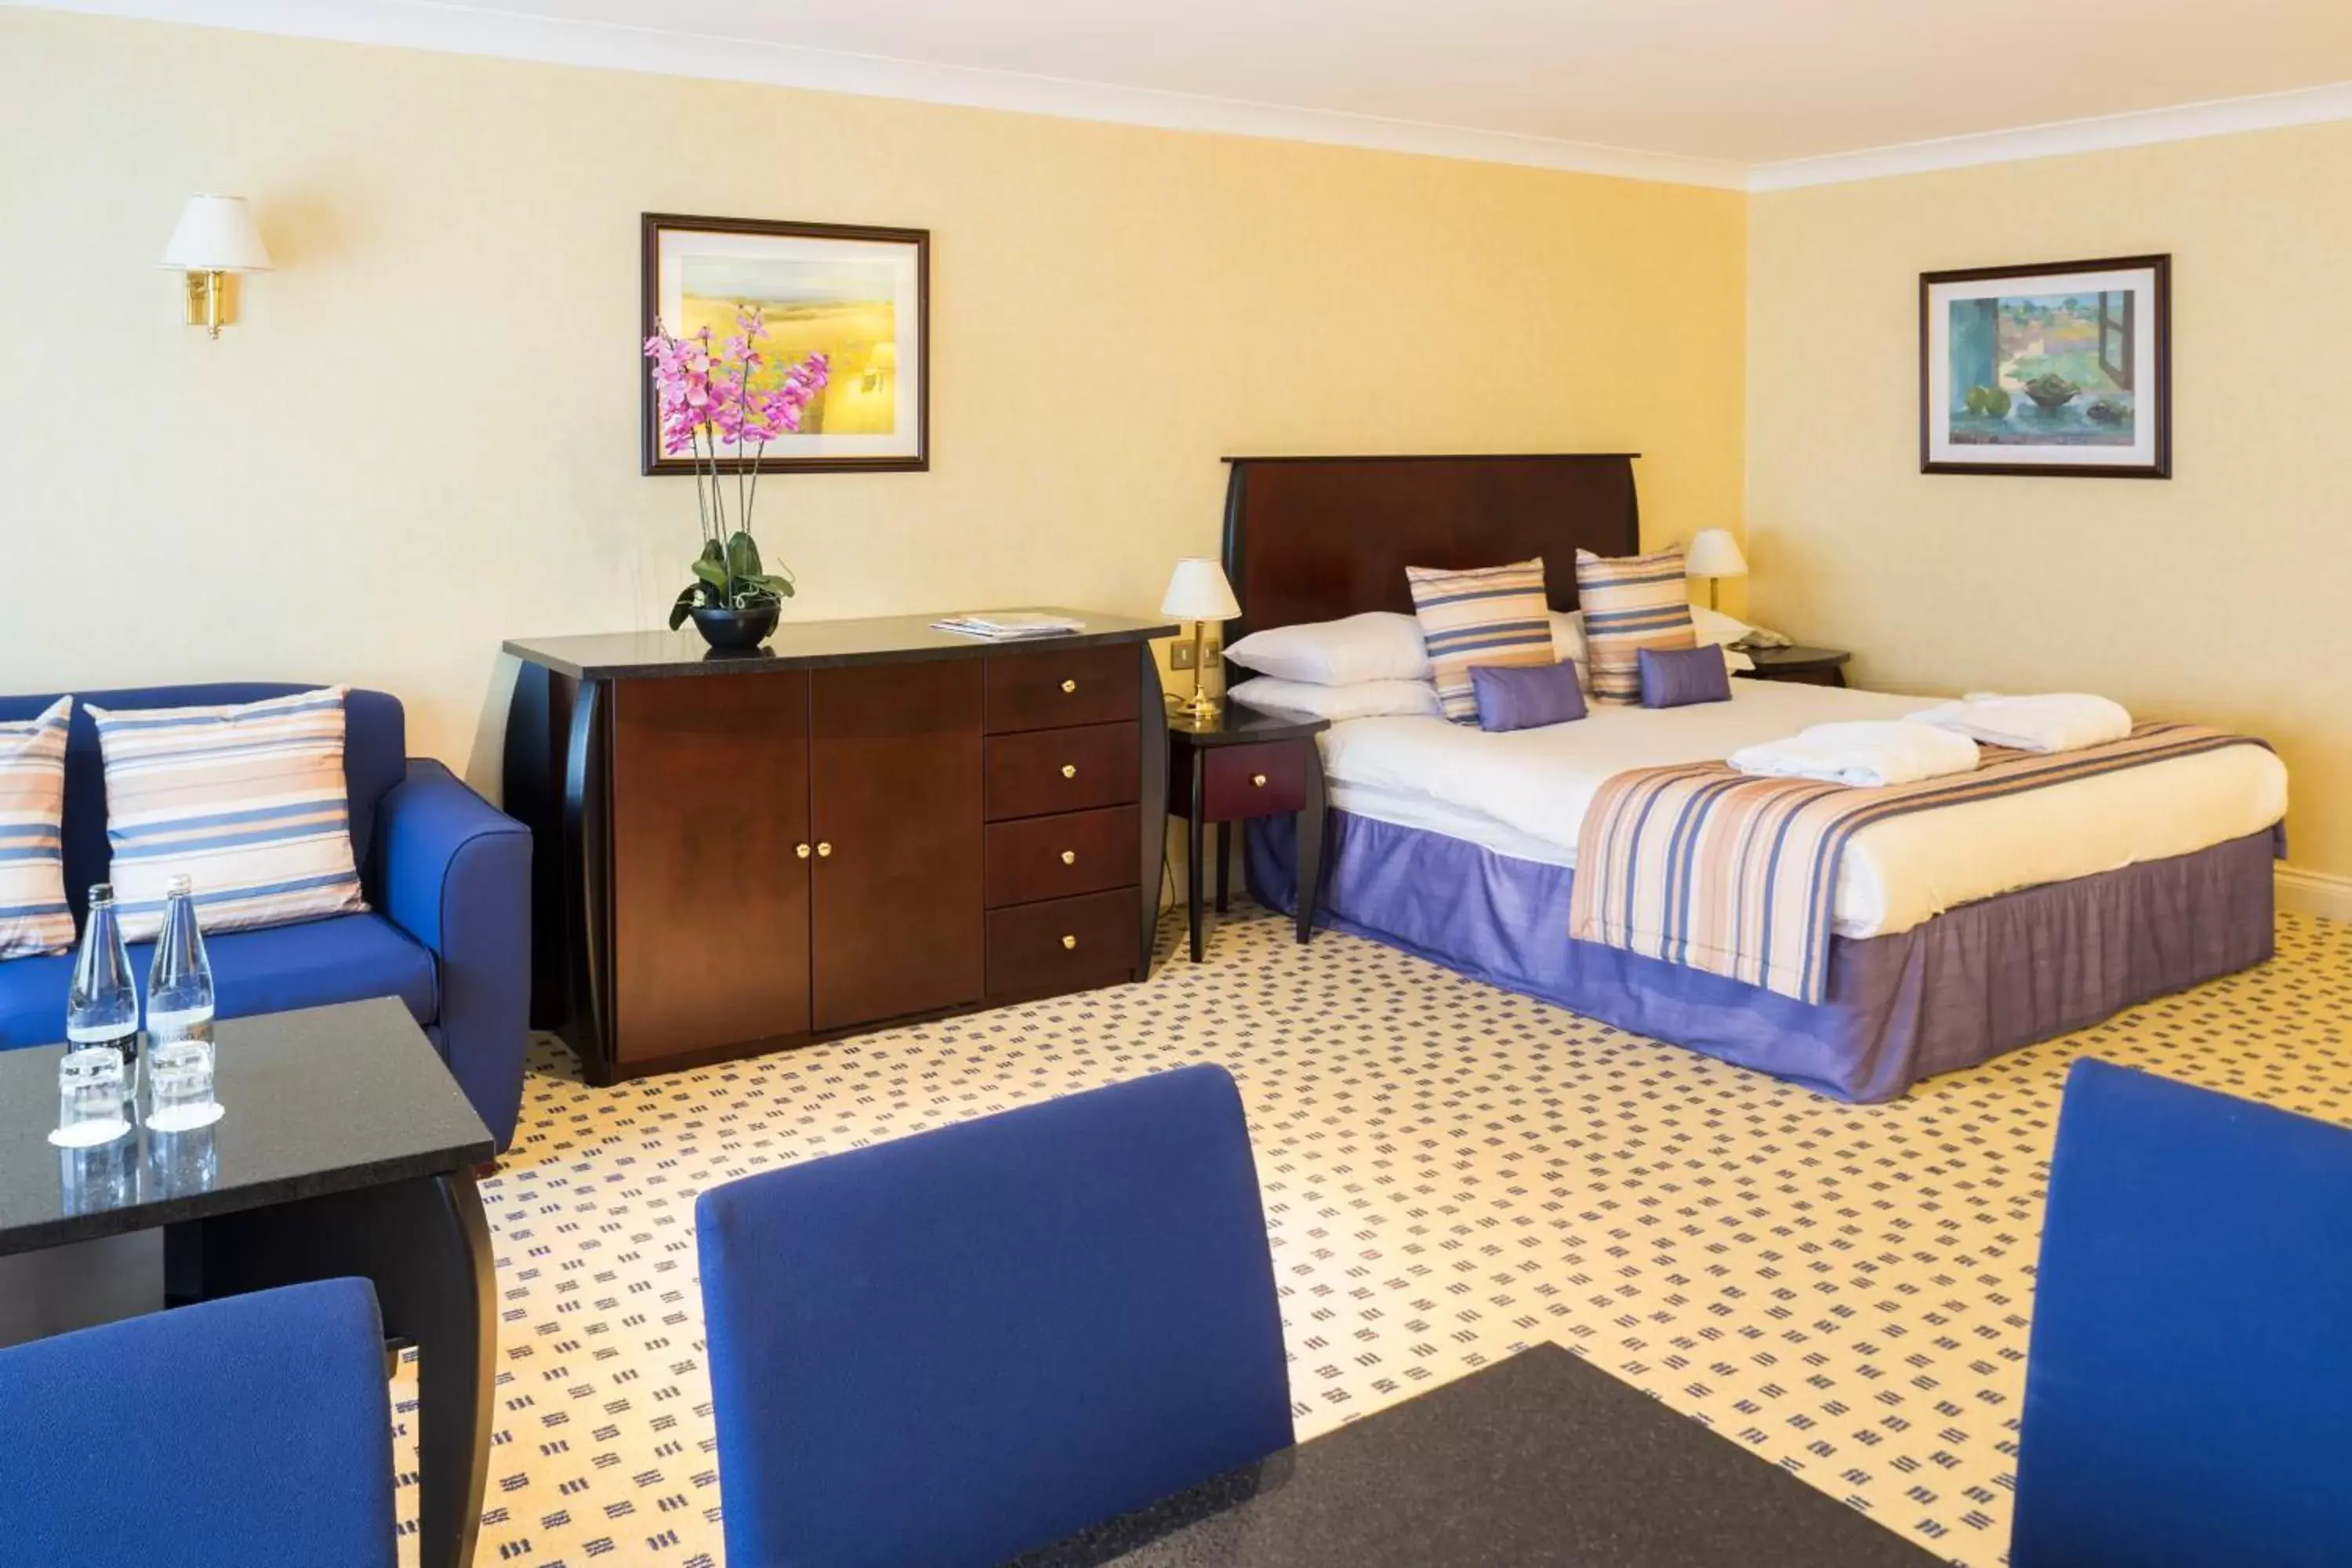 Bed, Room Photo in Basingstoke Country Hotel & Spa